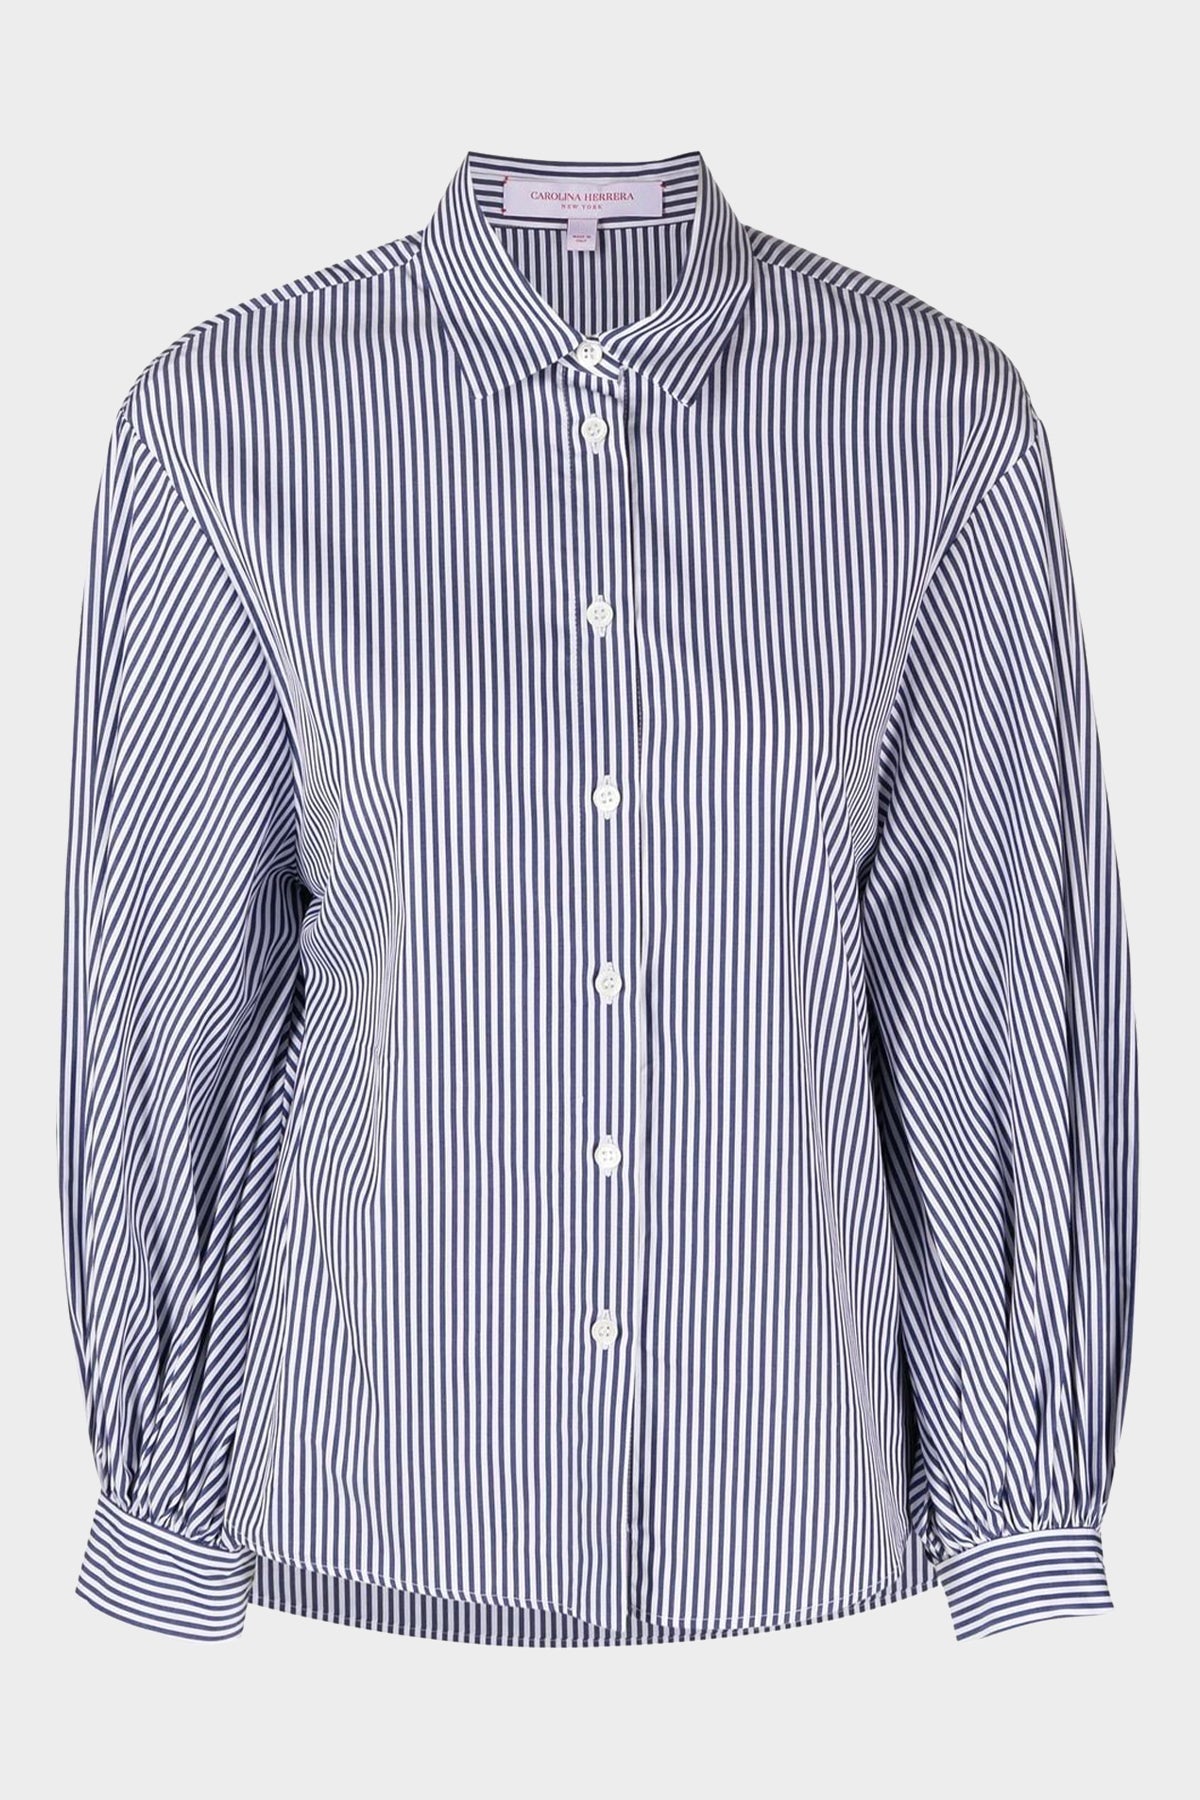 Balloon Sleeve Striped Shirt in White/Blue - shop-olivia.com